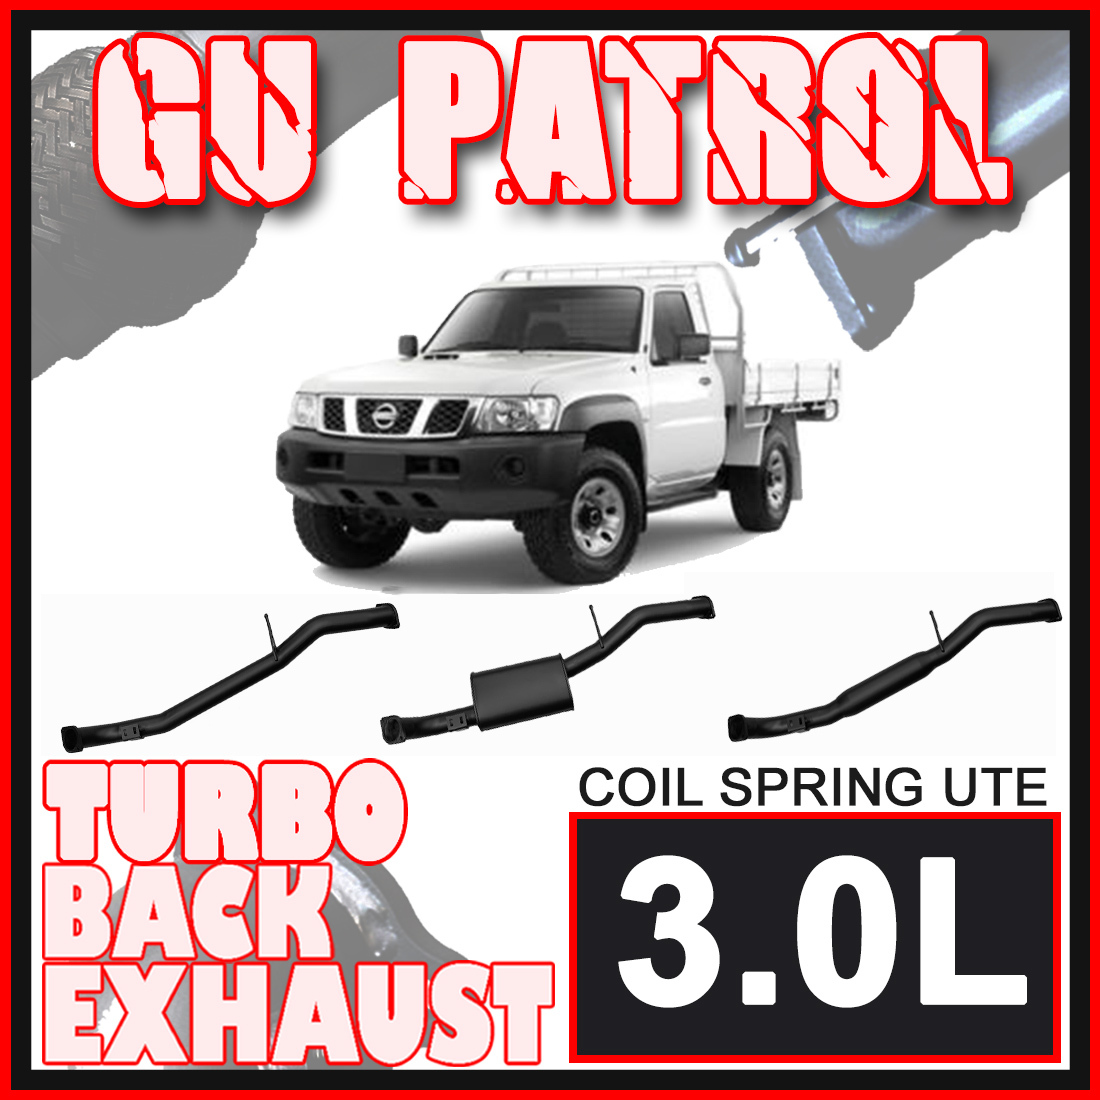 Nissan Patrol GU Coil Spring Ute 3L Ignite Exhaust image